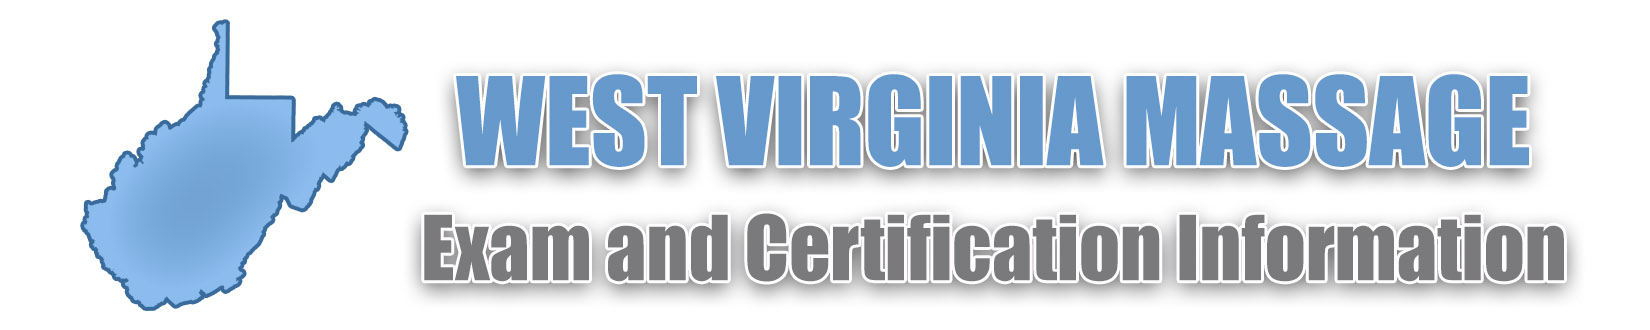 West Virginia MBLEX Massage Exam and Certification Information